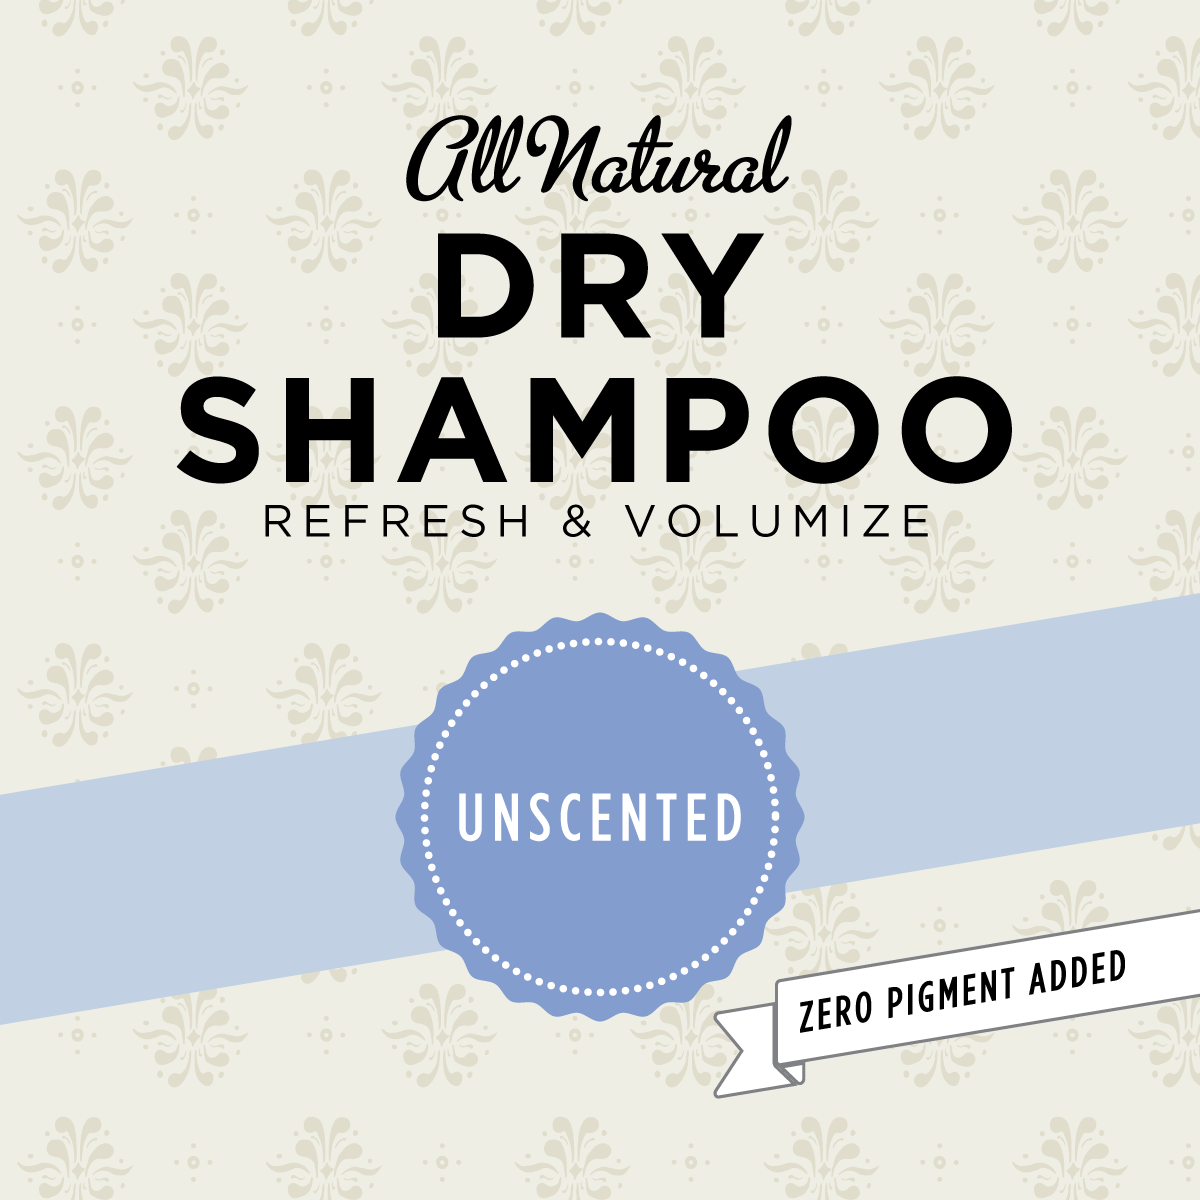 Organic unscented dry shampoo.